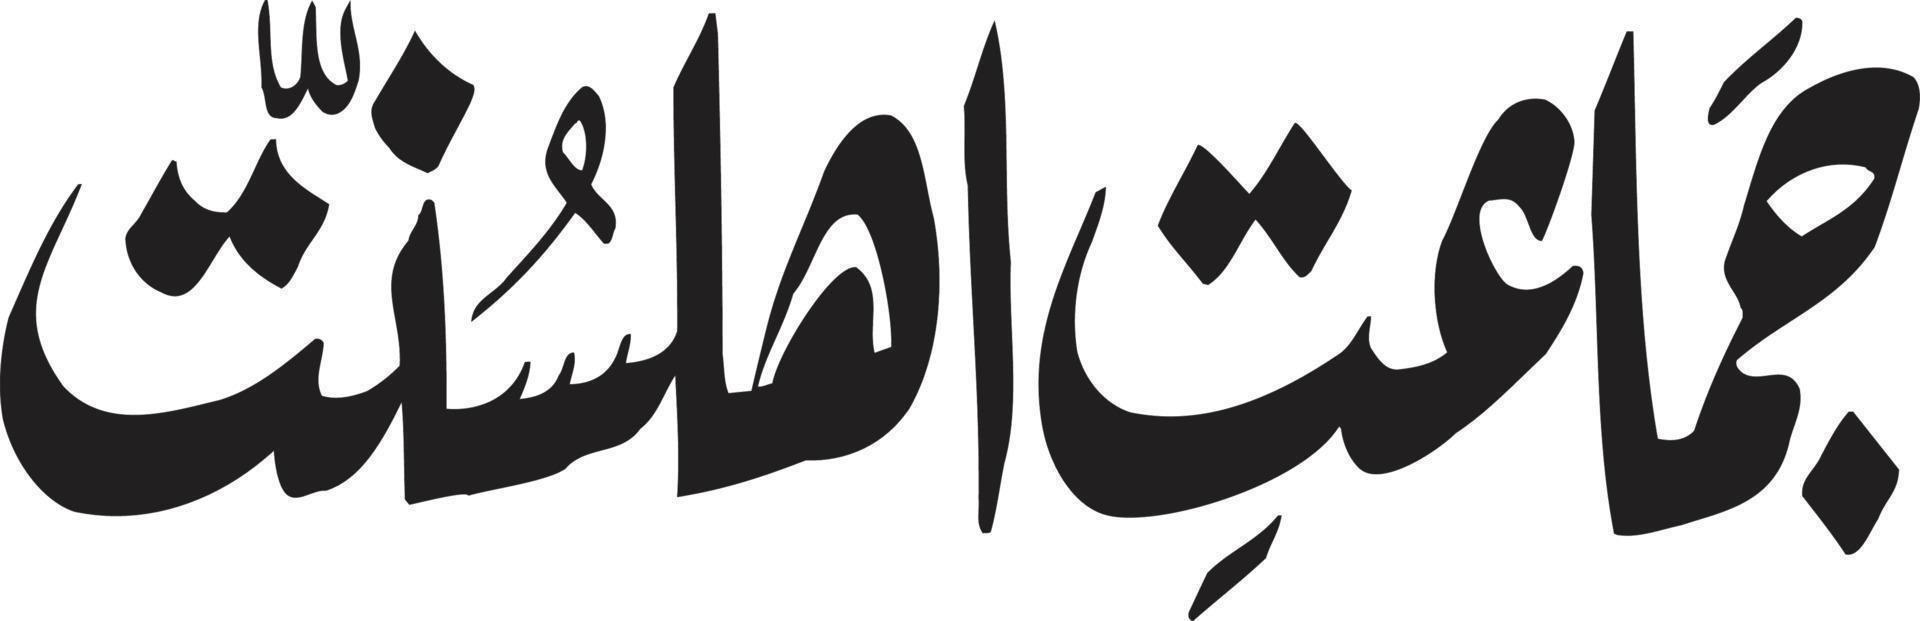 jamatt ihelsunat titelislamisk urdu arabicum kalligrafi fri vektor